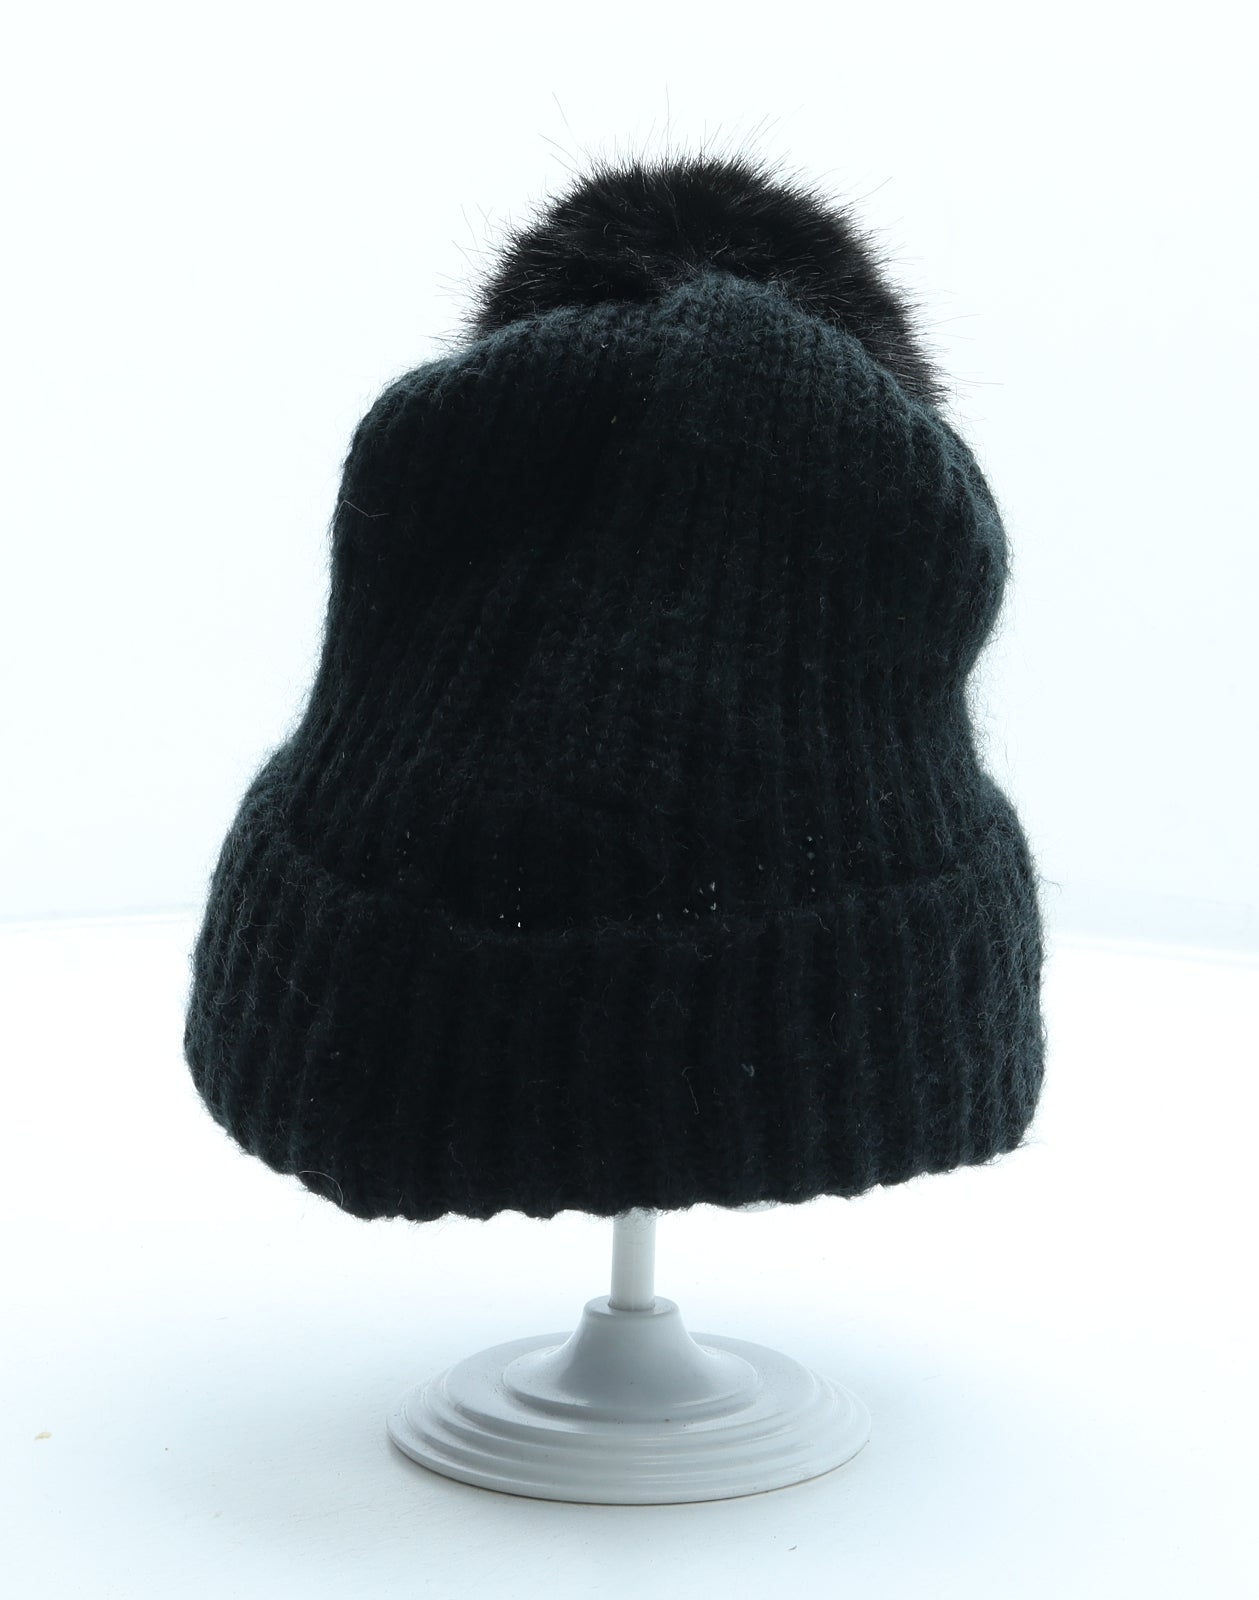 Zara Womens Black Acrylic Bobble Hat One Size